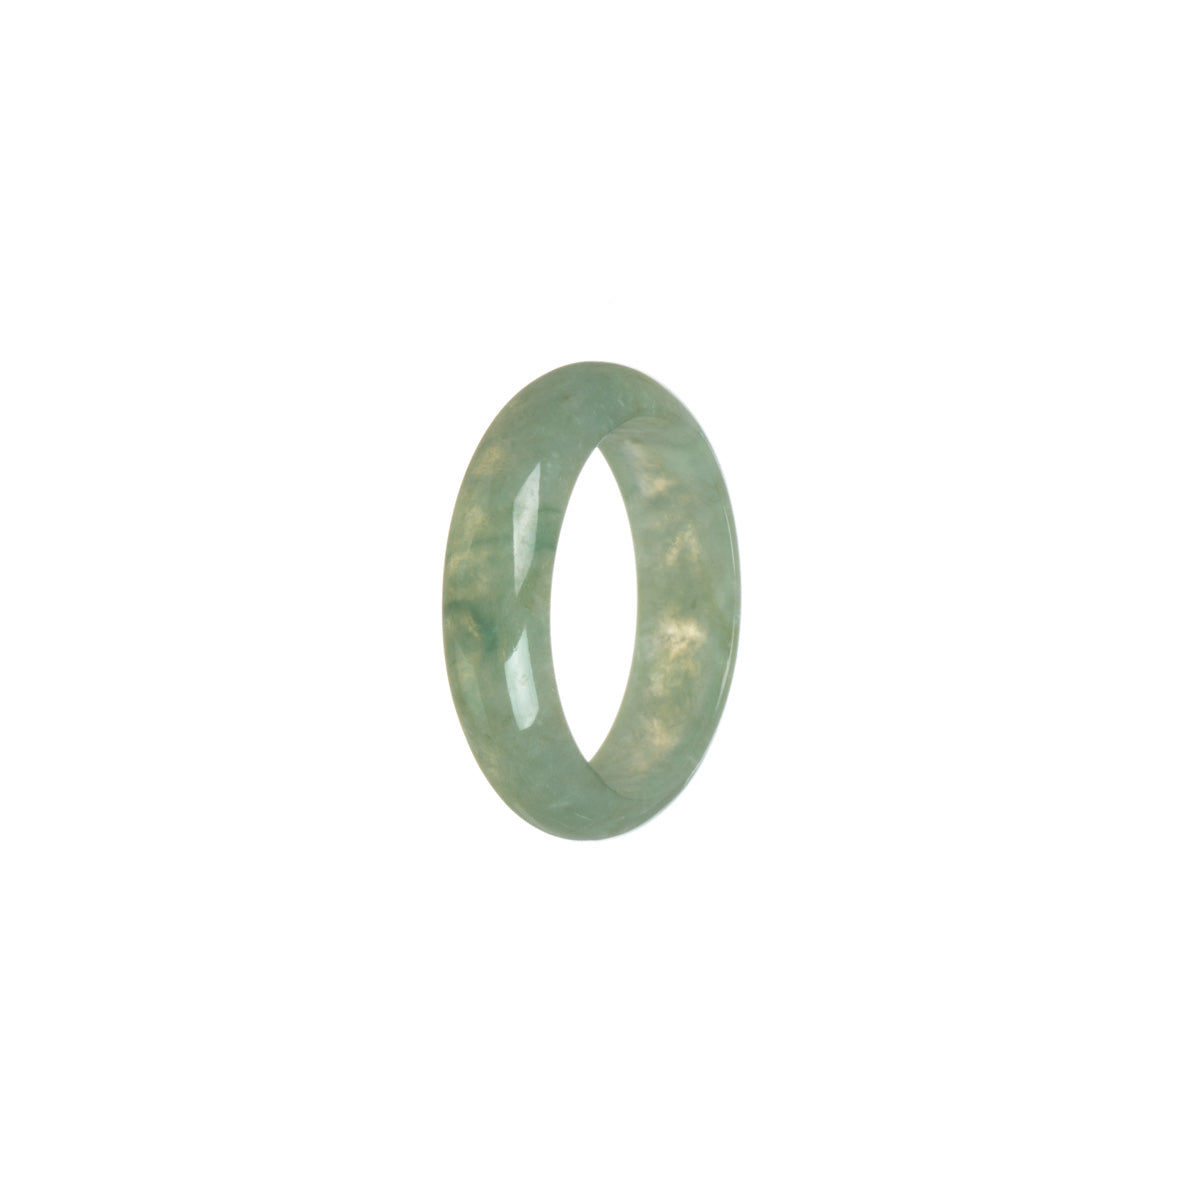 Real Icy greyish green Jadeite Jade Ring- Size T